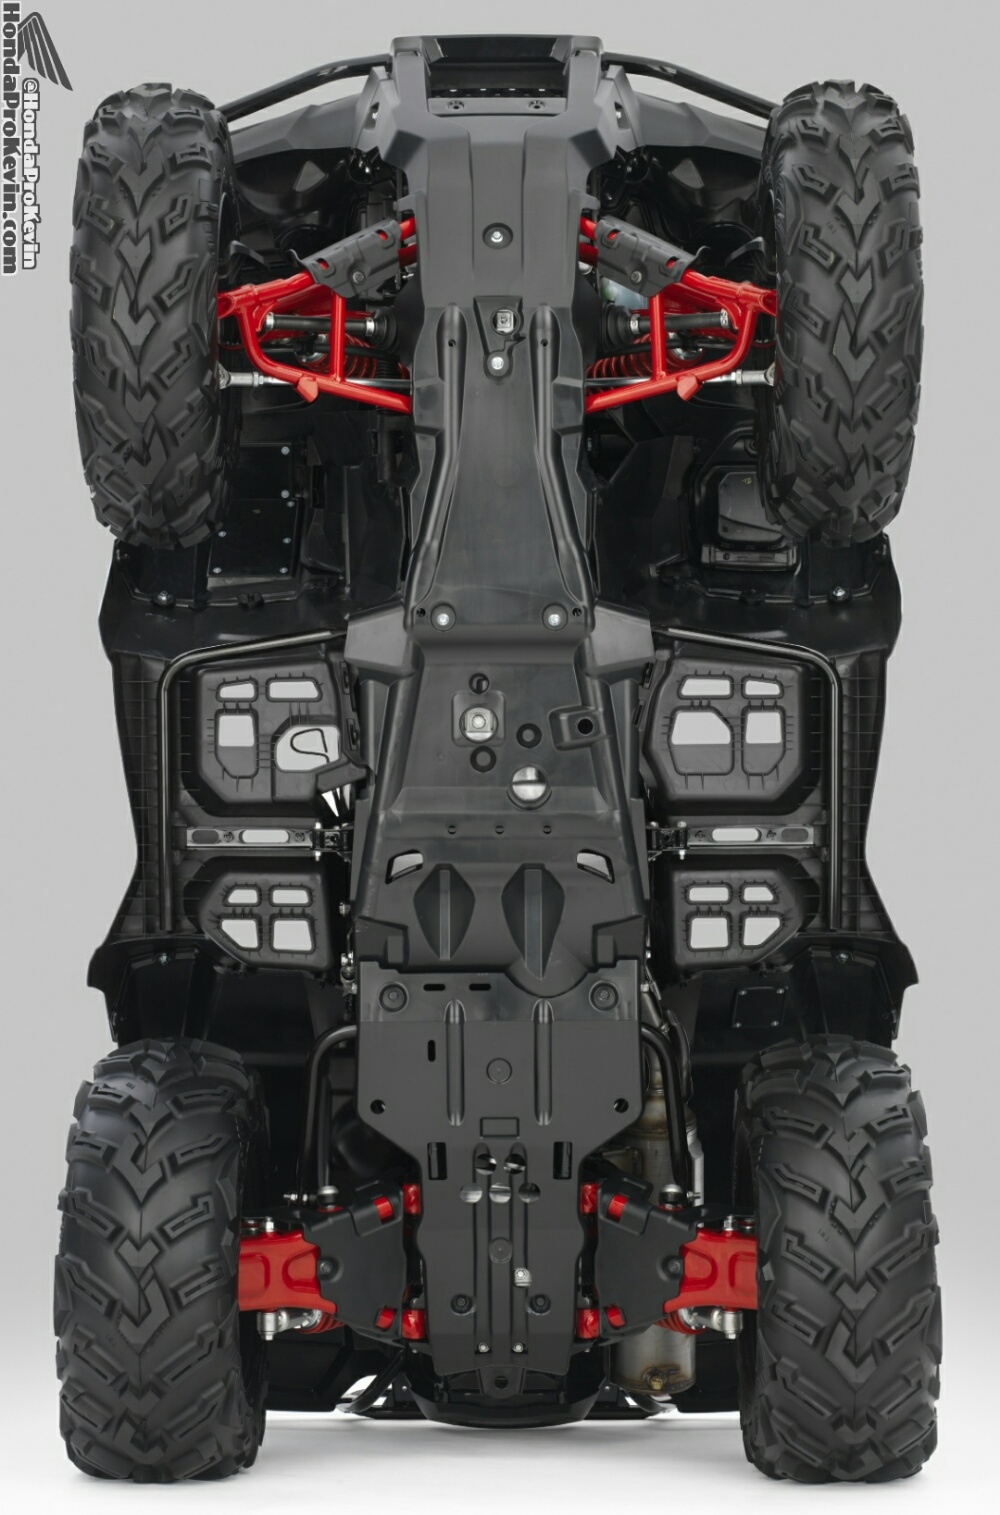 2022 Honda Foreman Rubicon 520 ATV Skid Plates / Guards - TRX520 Review of Specs